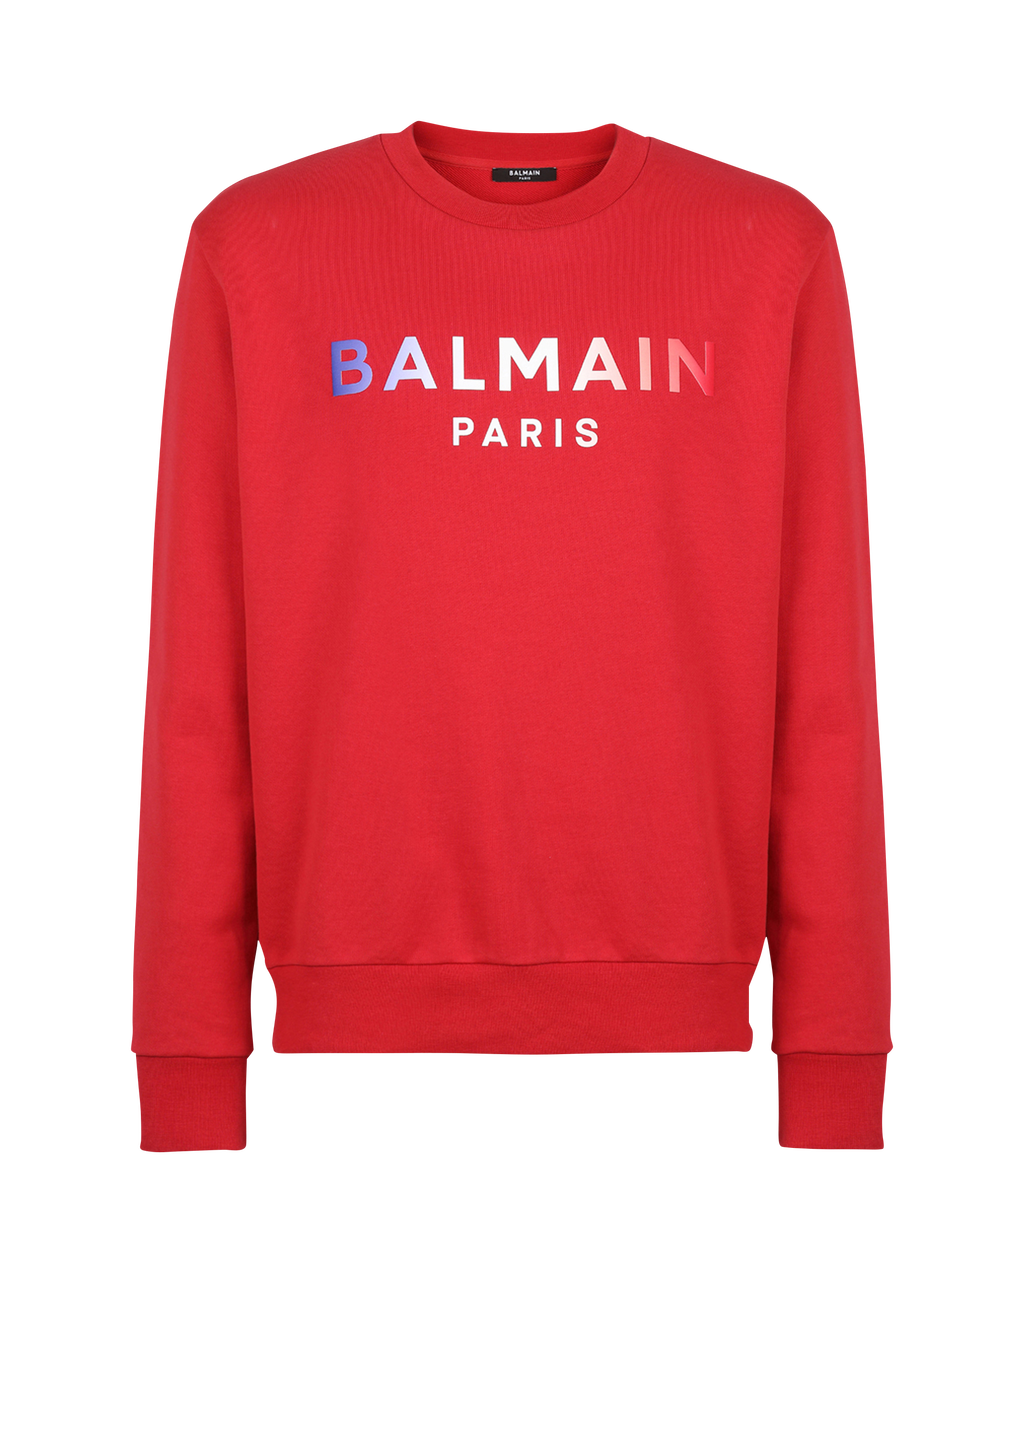 HIGH SUMMER CAPSULE - Cotton sweatshirt with Balmain Paris tie-dye logo print, red, hi-res